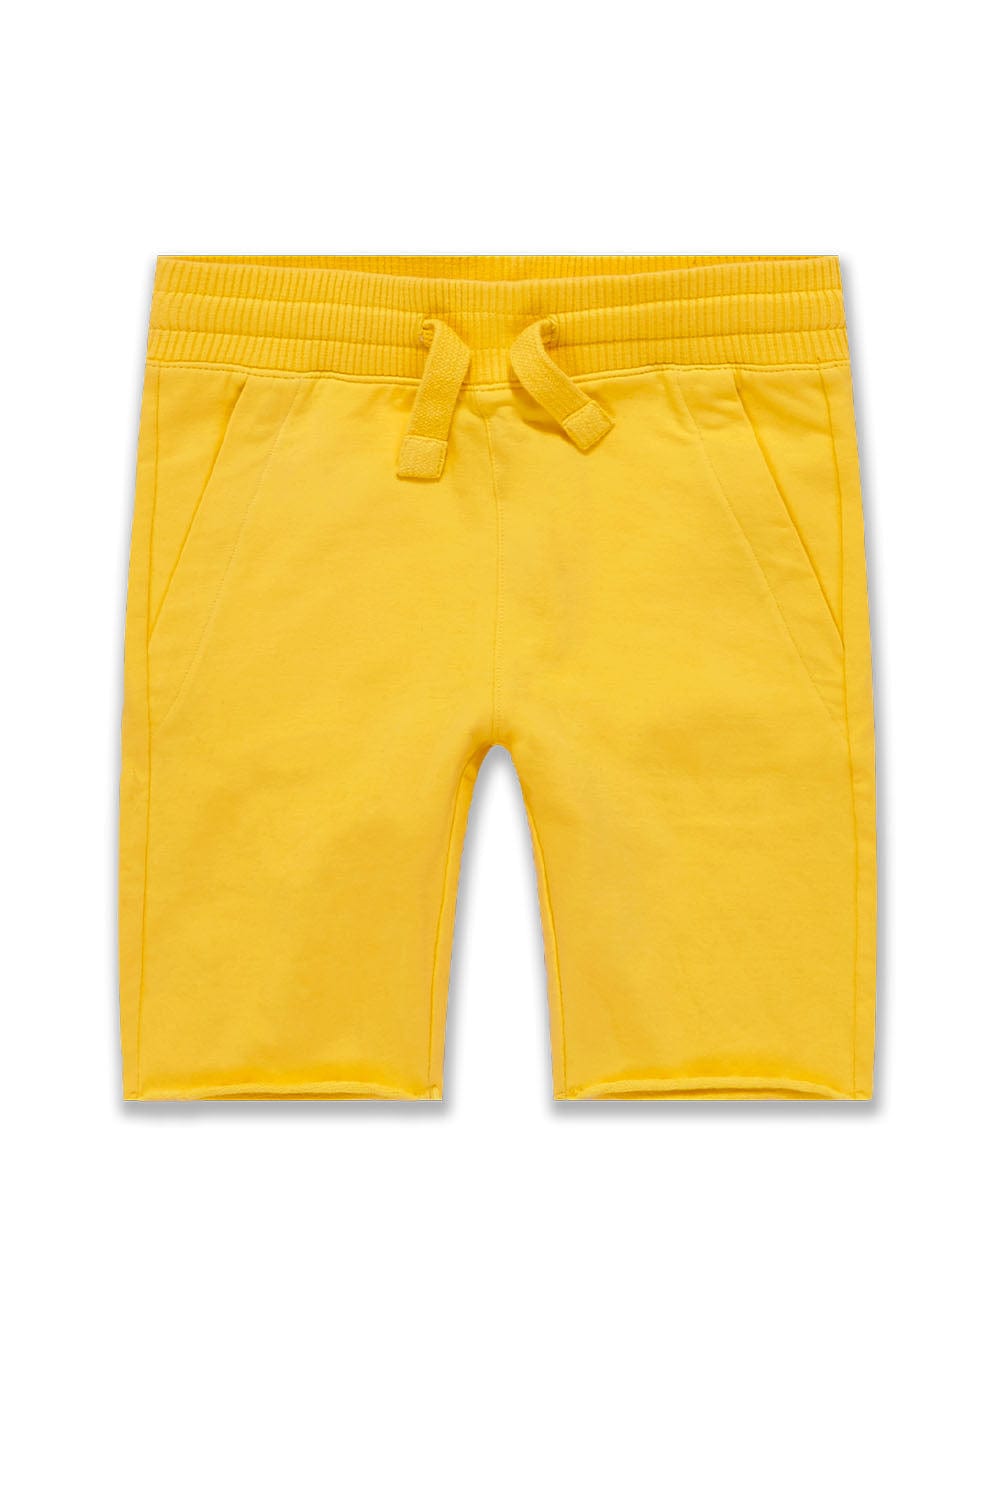 JC Kids Kids Palma French Terry Shorts (Name Your Price) Slicker Yellow / 2